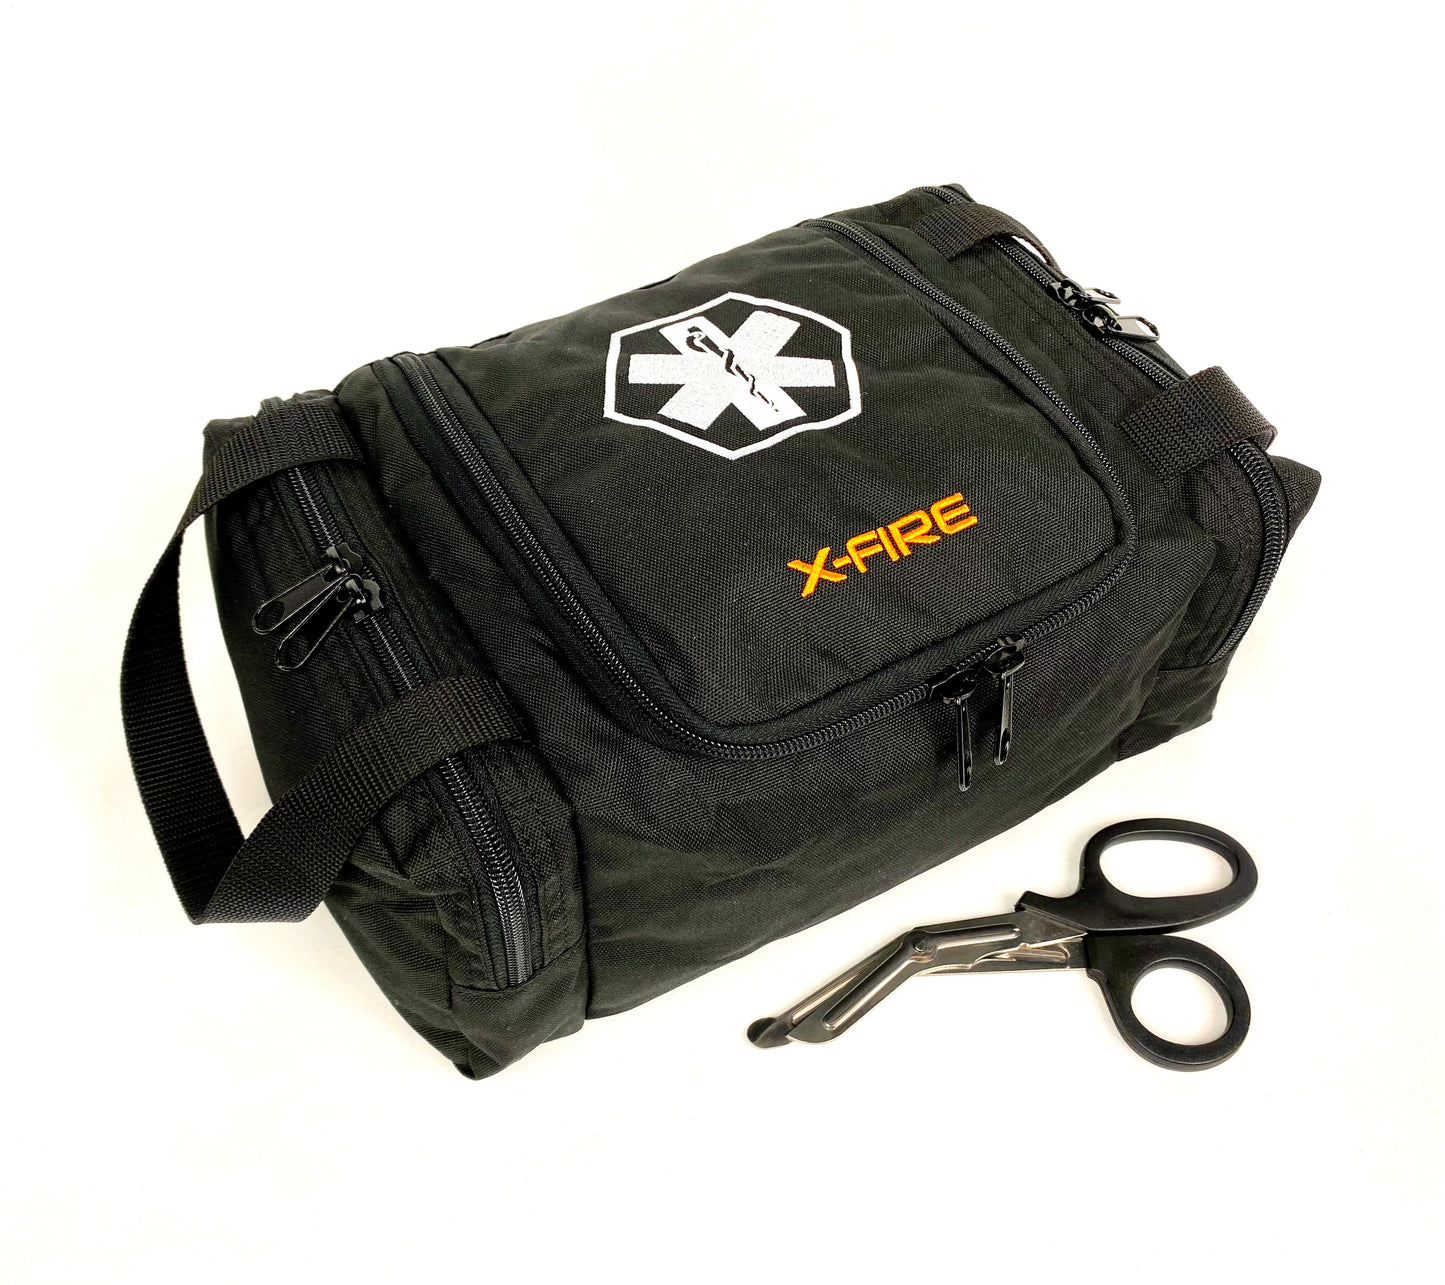 X-FIRE Compact (12"x8"x5.5" inches) EMS First Responder Trauma Essentials Bag (EMPTY)